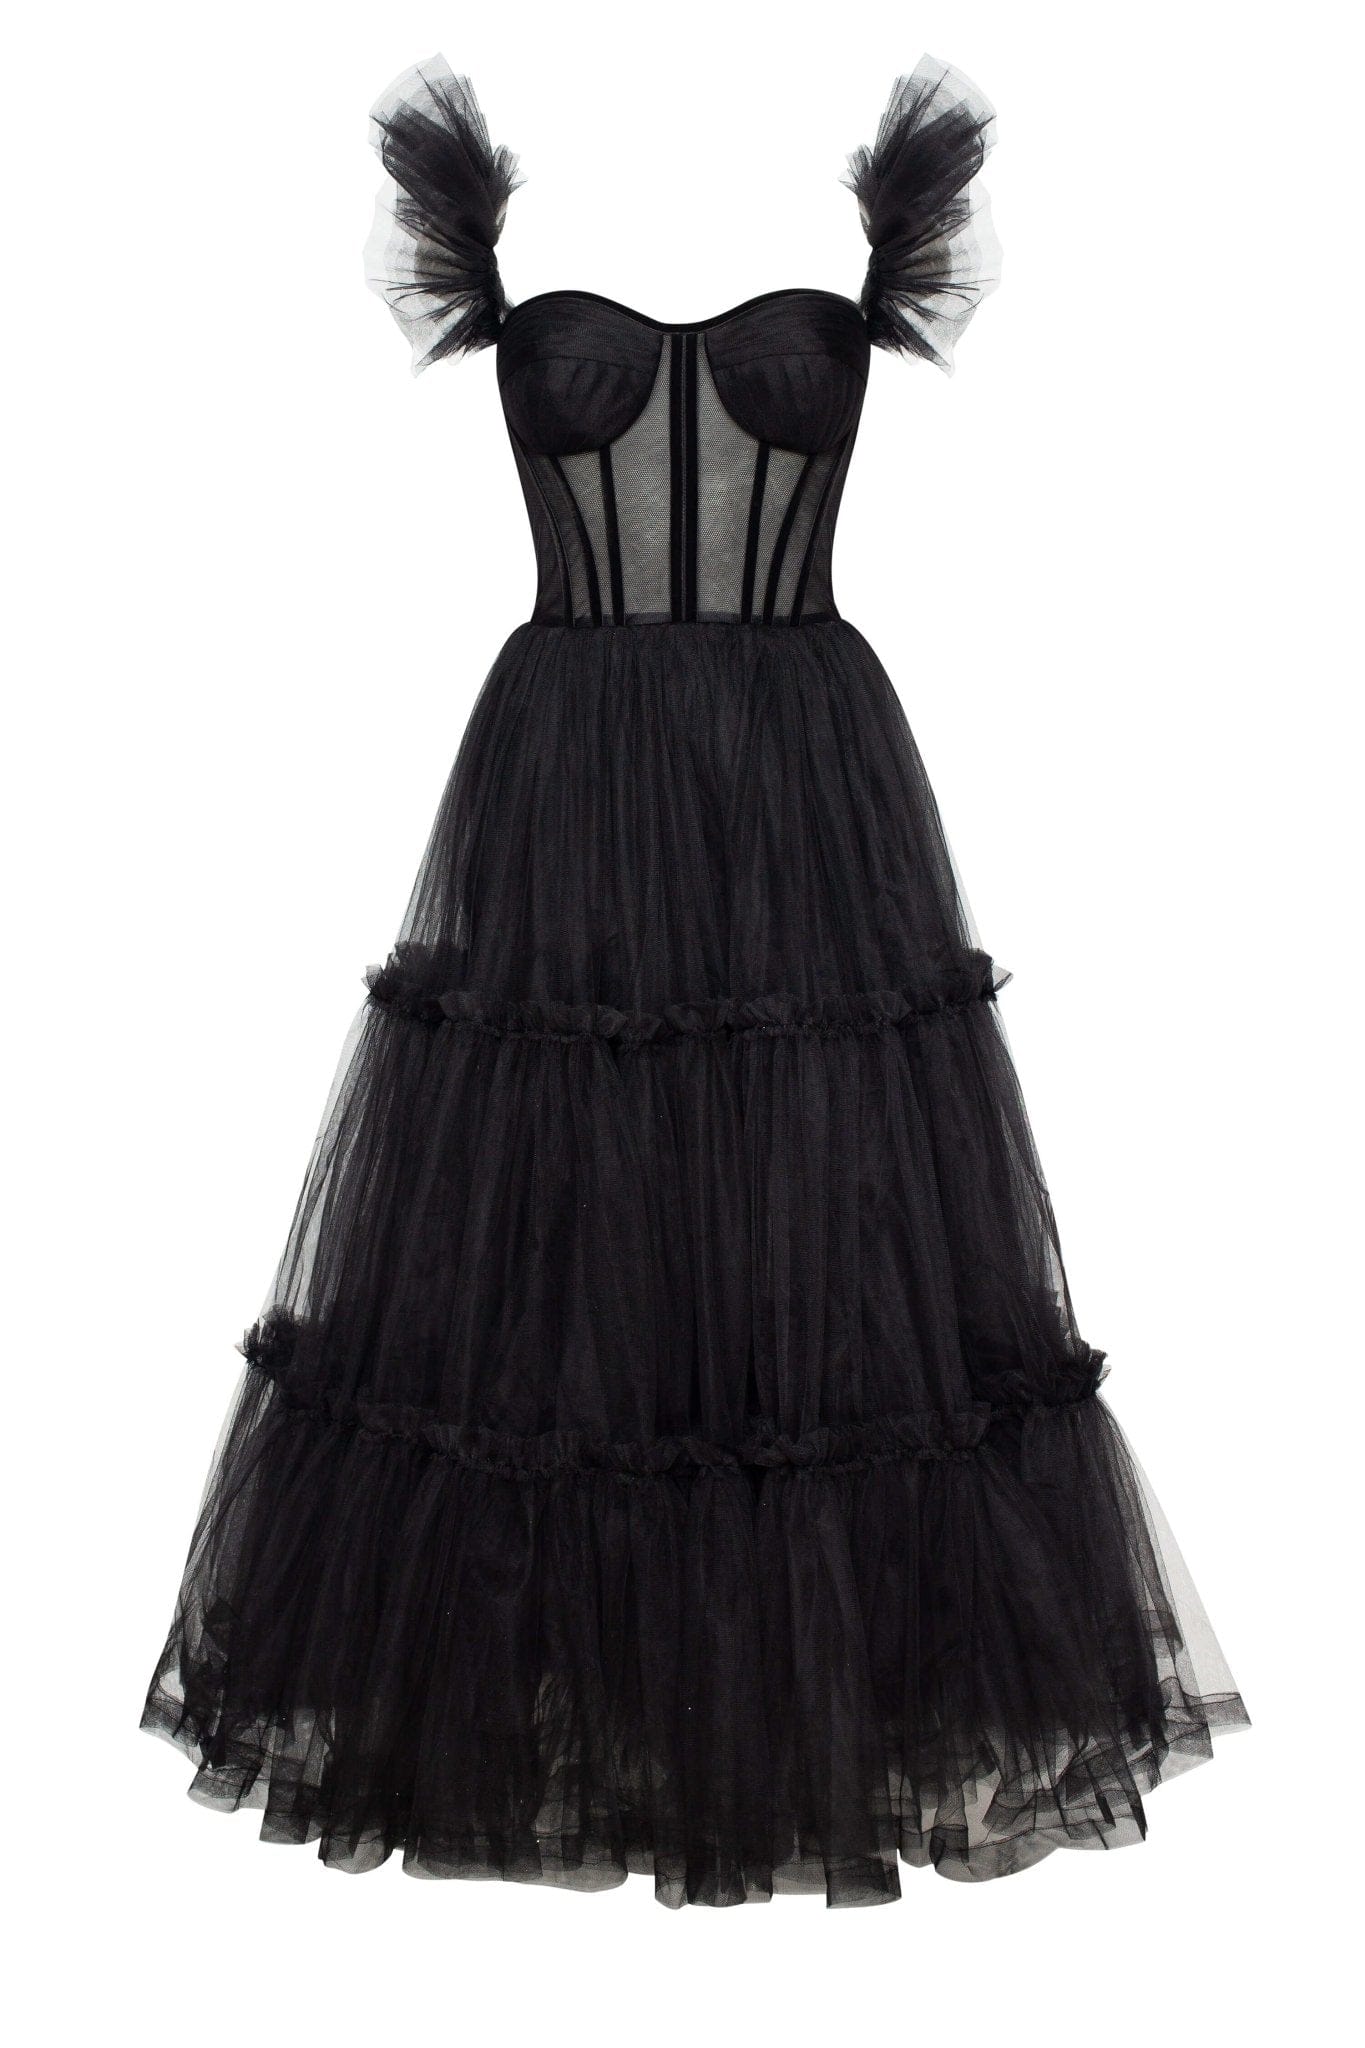 Black Casual side cut out maxi dress ➤➤ Milla Dresses - USA